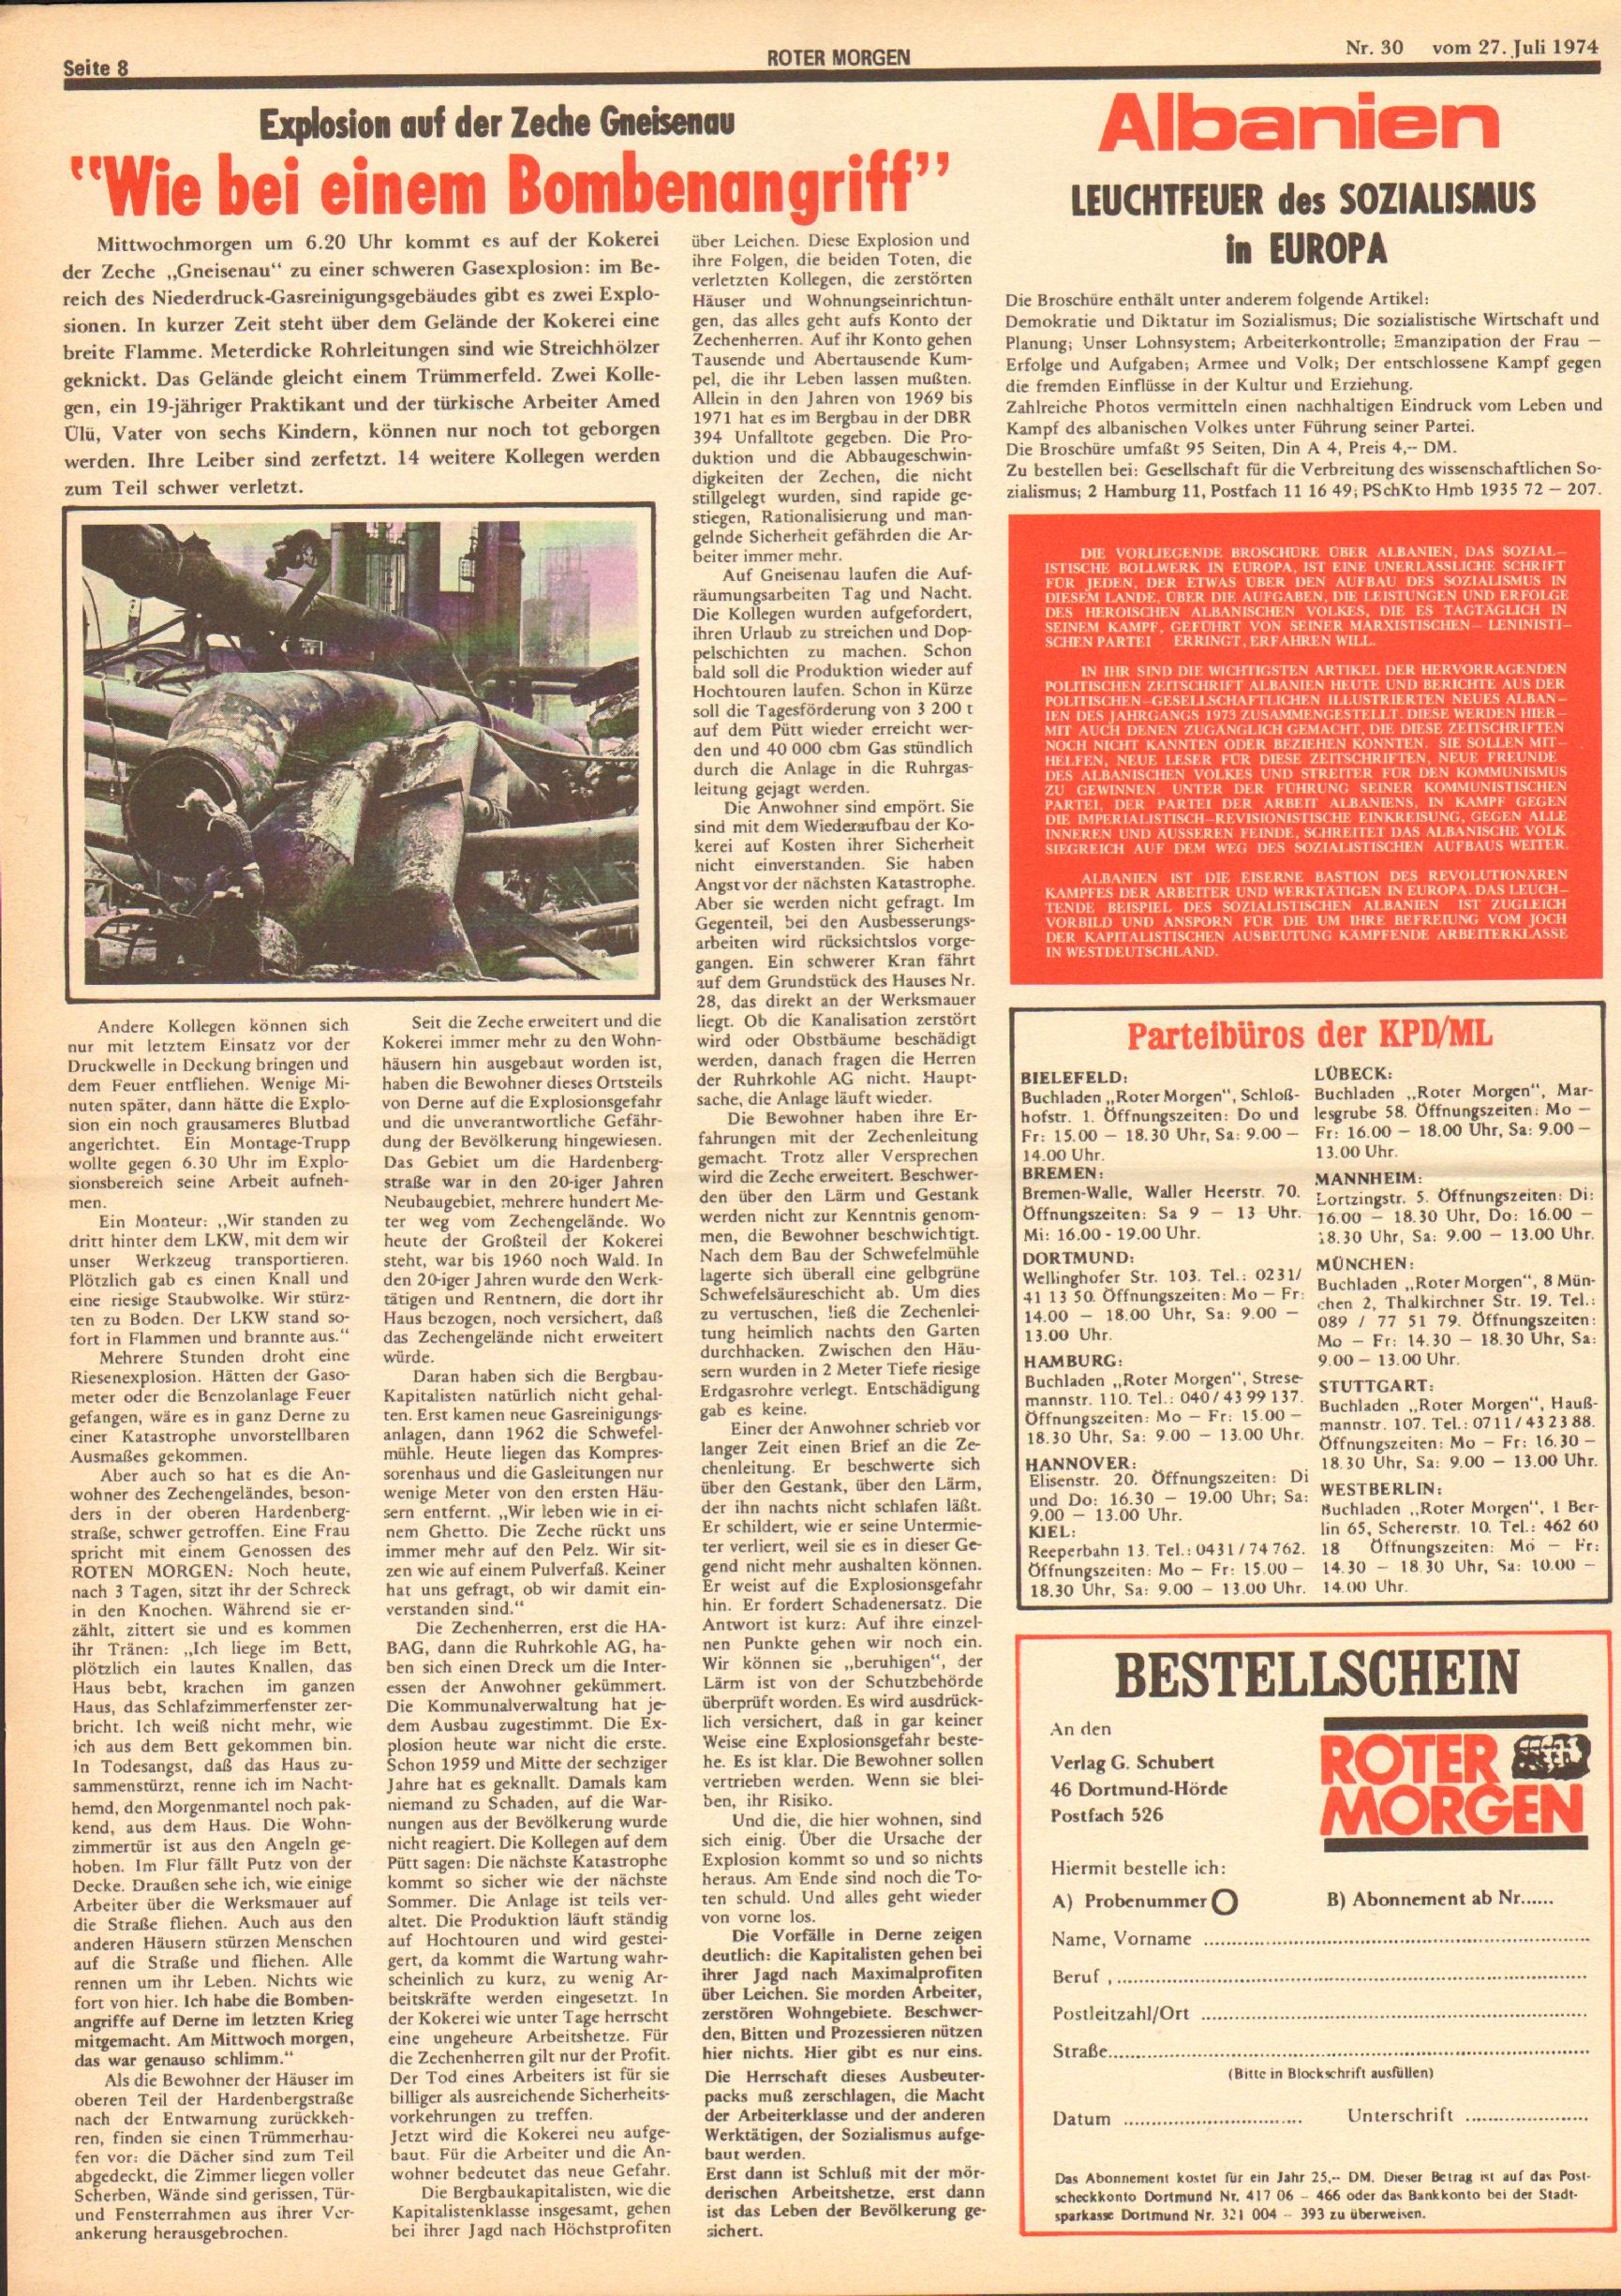 Roter Morgen, 8. Jg., 27. Juli 1974, Nr. 30, Seite 8